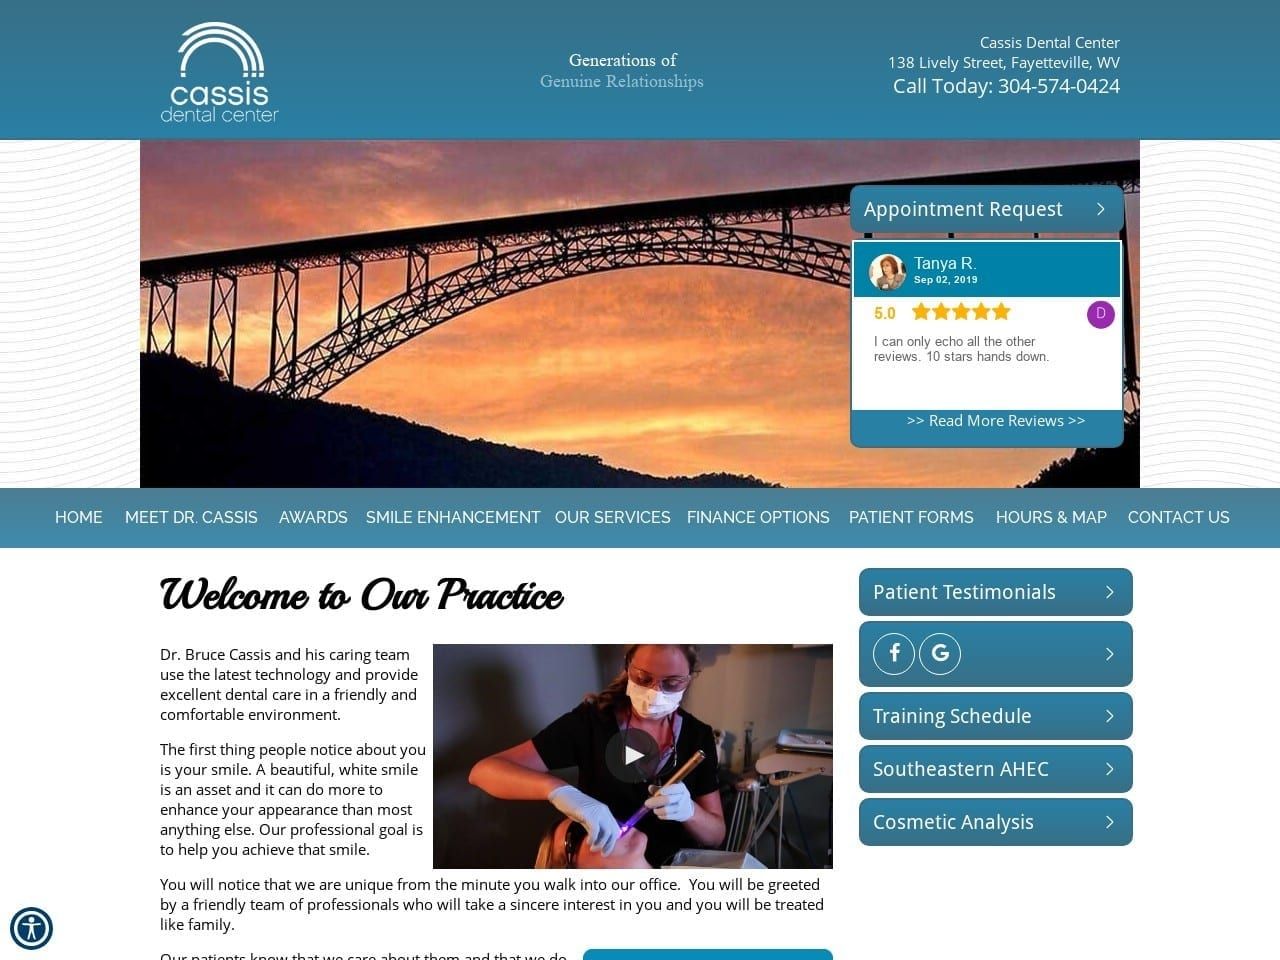 Cassis Dental Center Website Screenshot from cassisdentalcenter.com